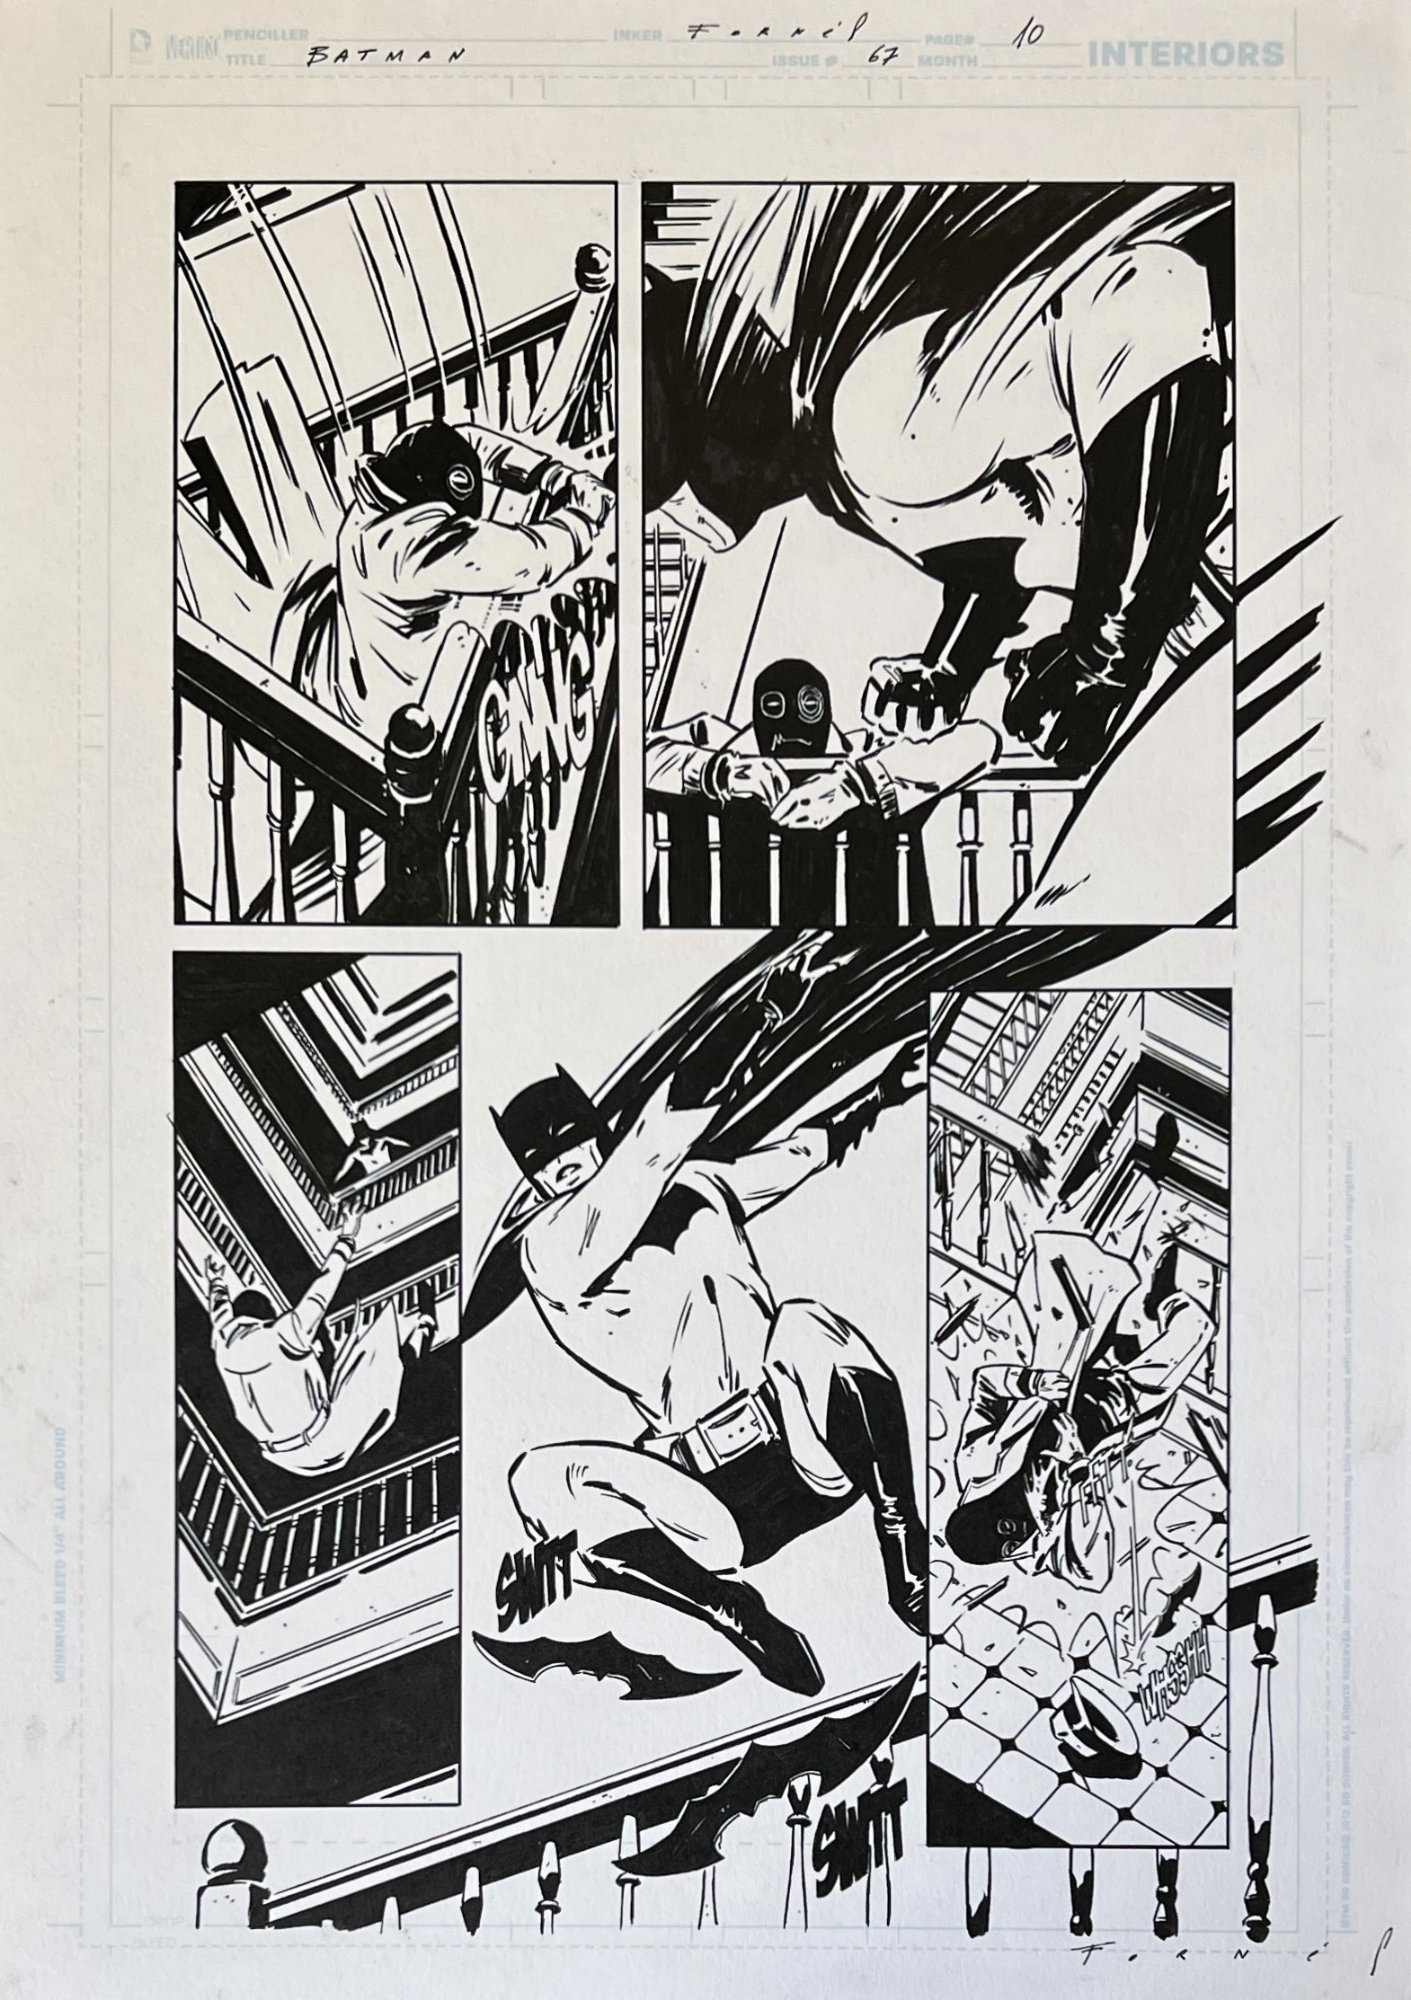 Jorge Fornes - Batman Issue 67 Page 10, in Victor Bracamontes's DC Interior  Art Comic Art Gallery Room